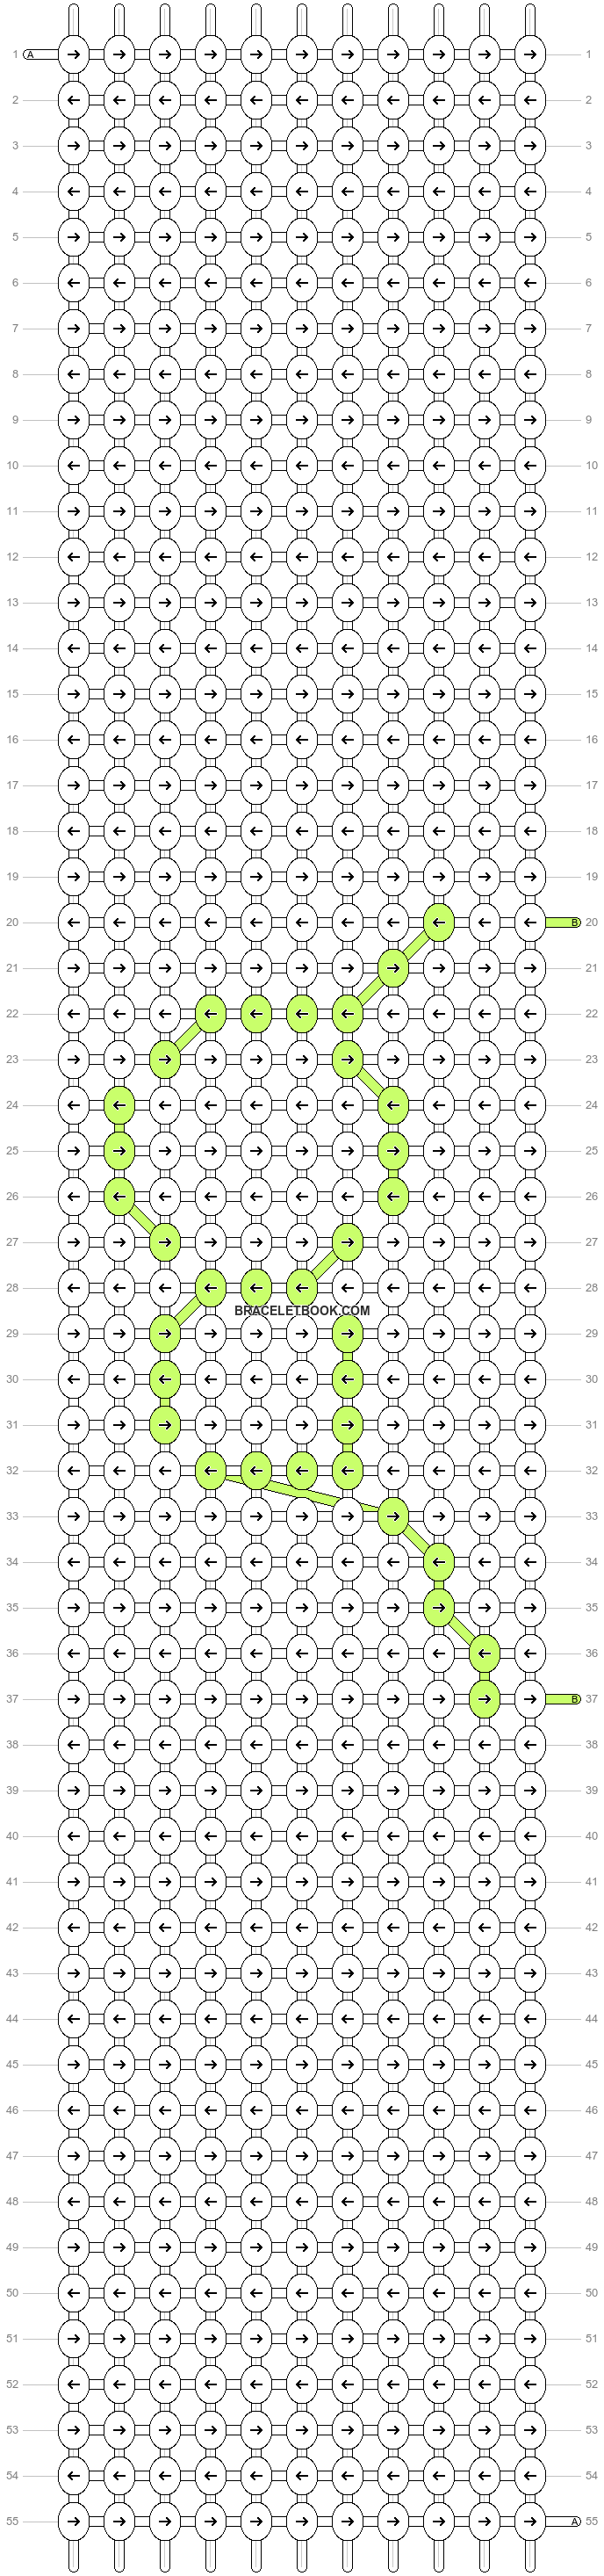 Alpha pattern #46134 variation #172195 pattern